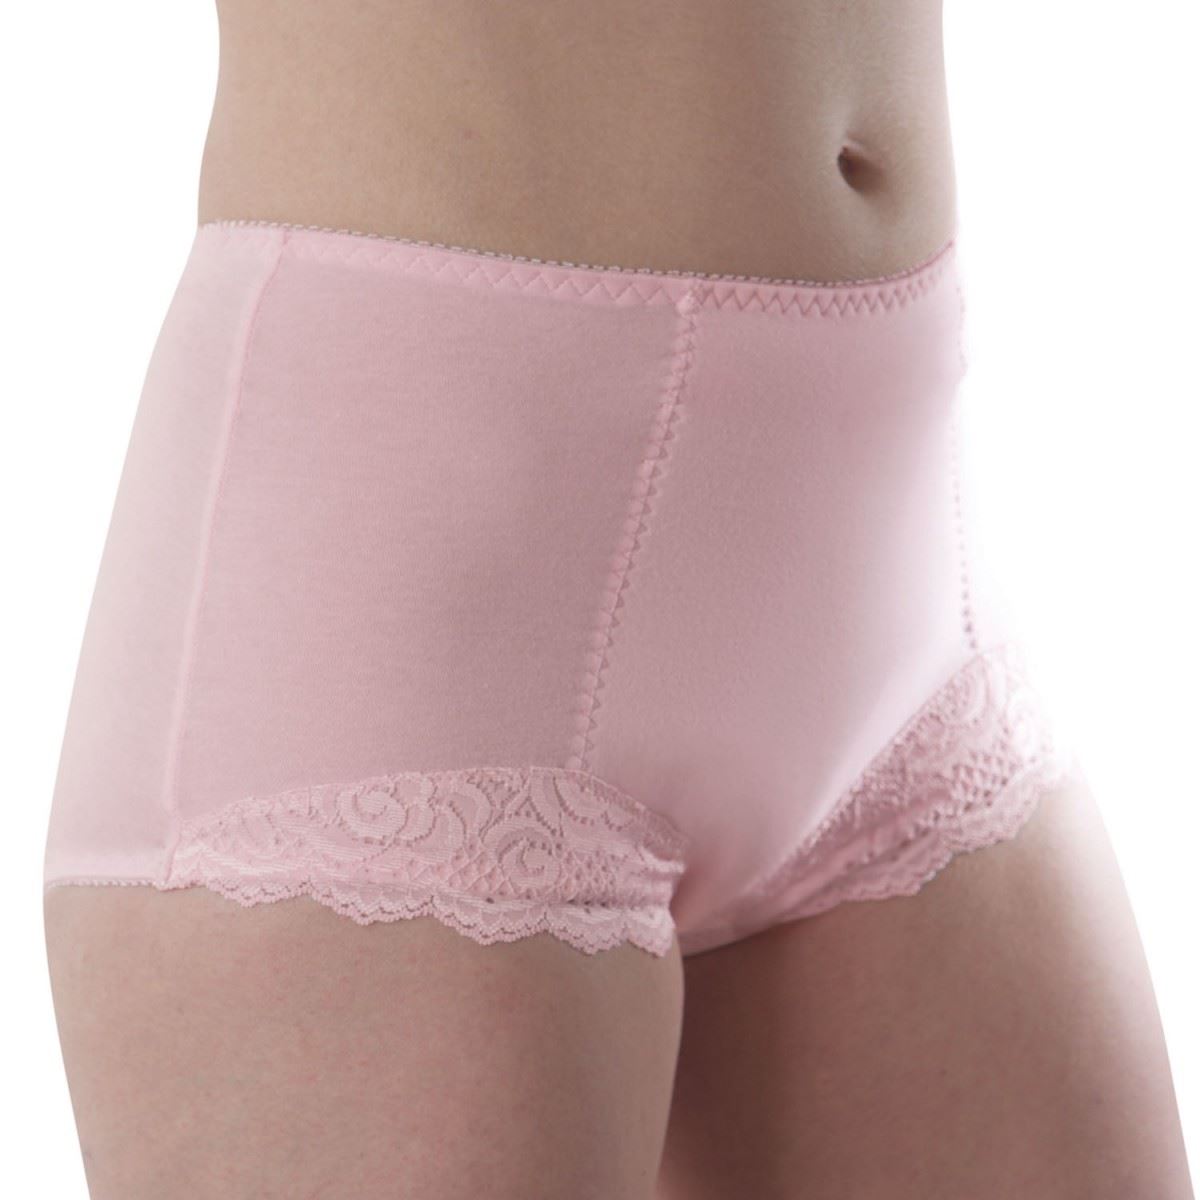 Prism Health Services. Conni Men's Oscar (Brief Style) Reusable  Incontinence Underwear